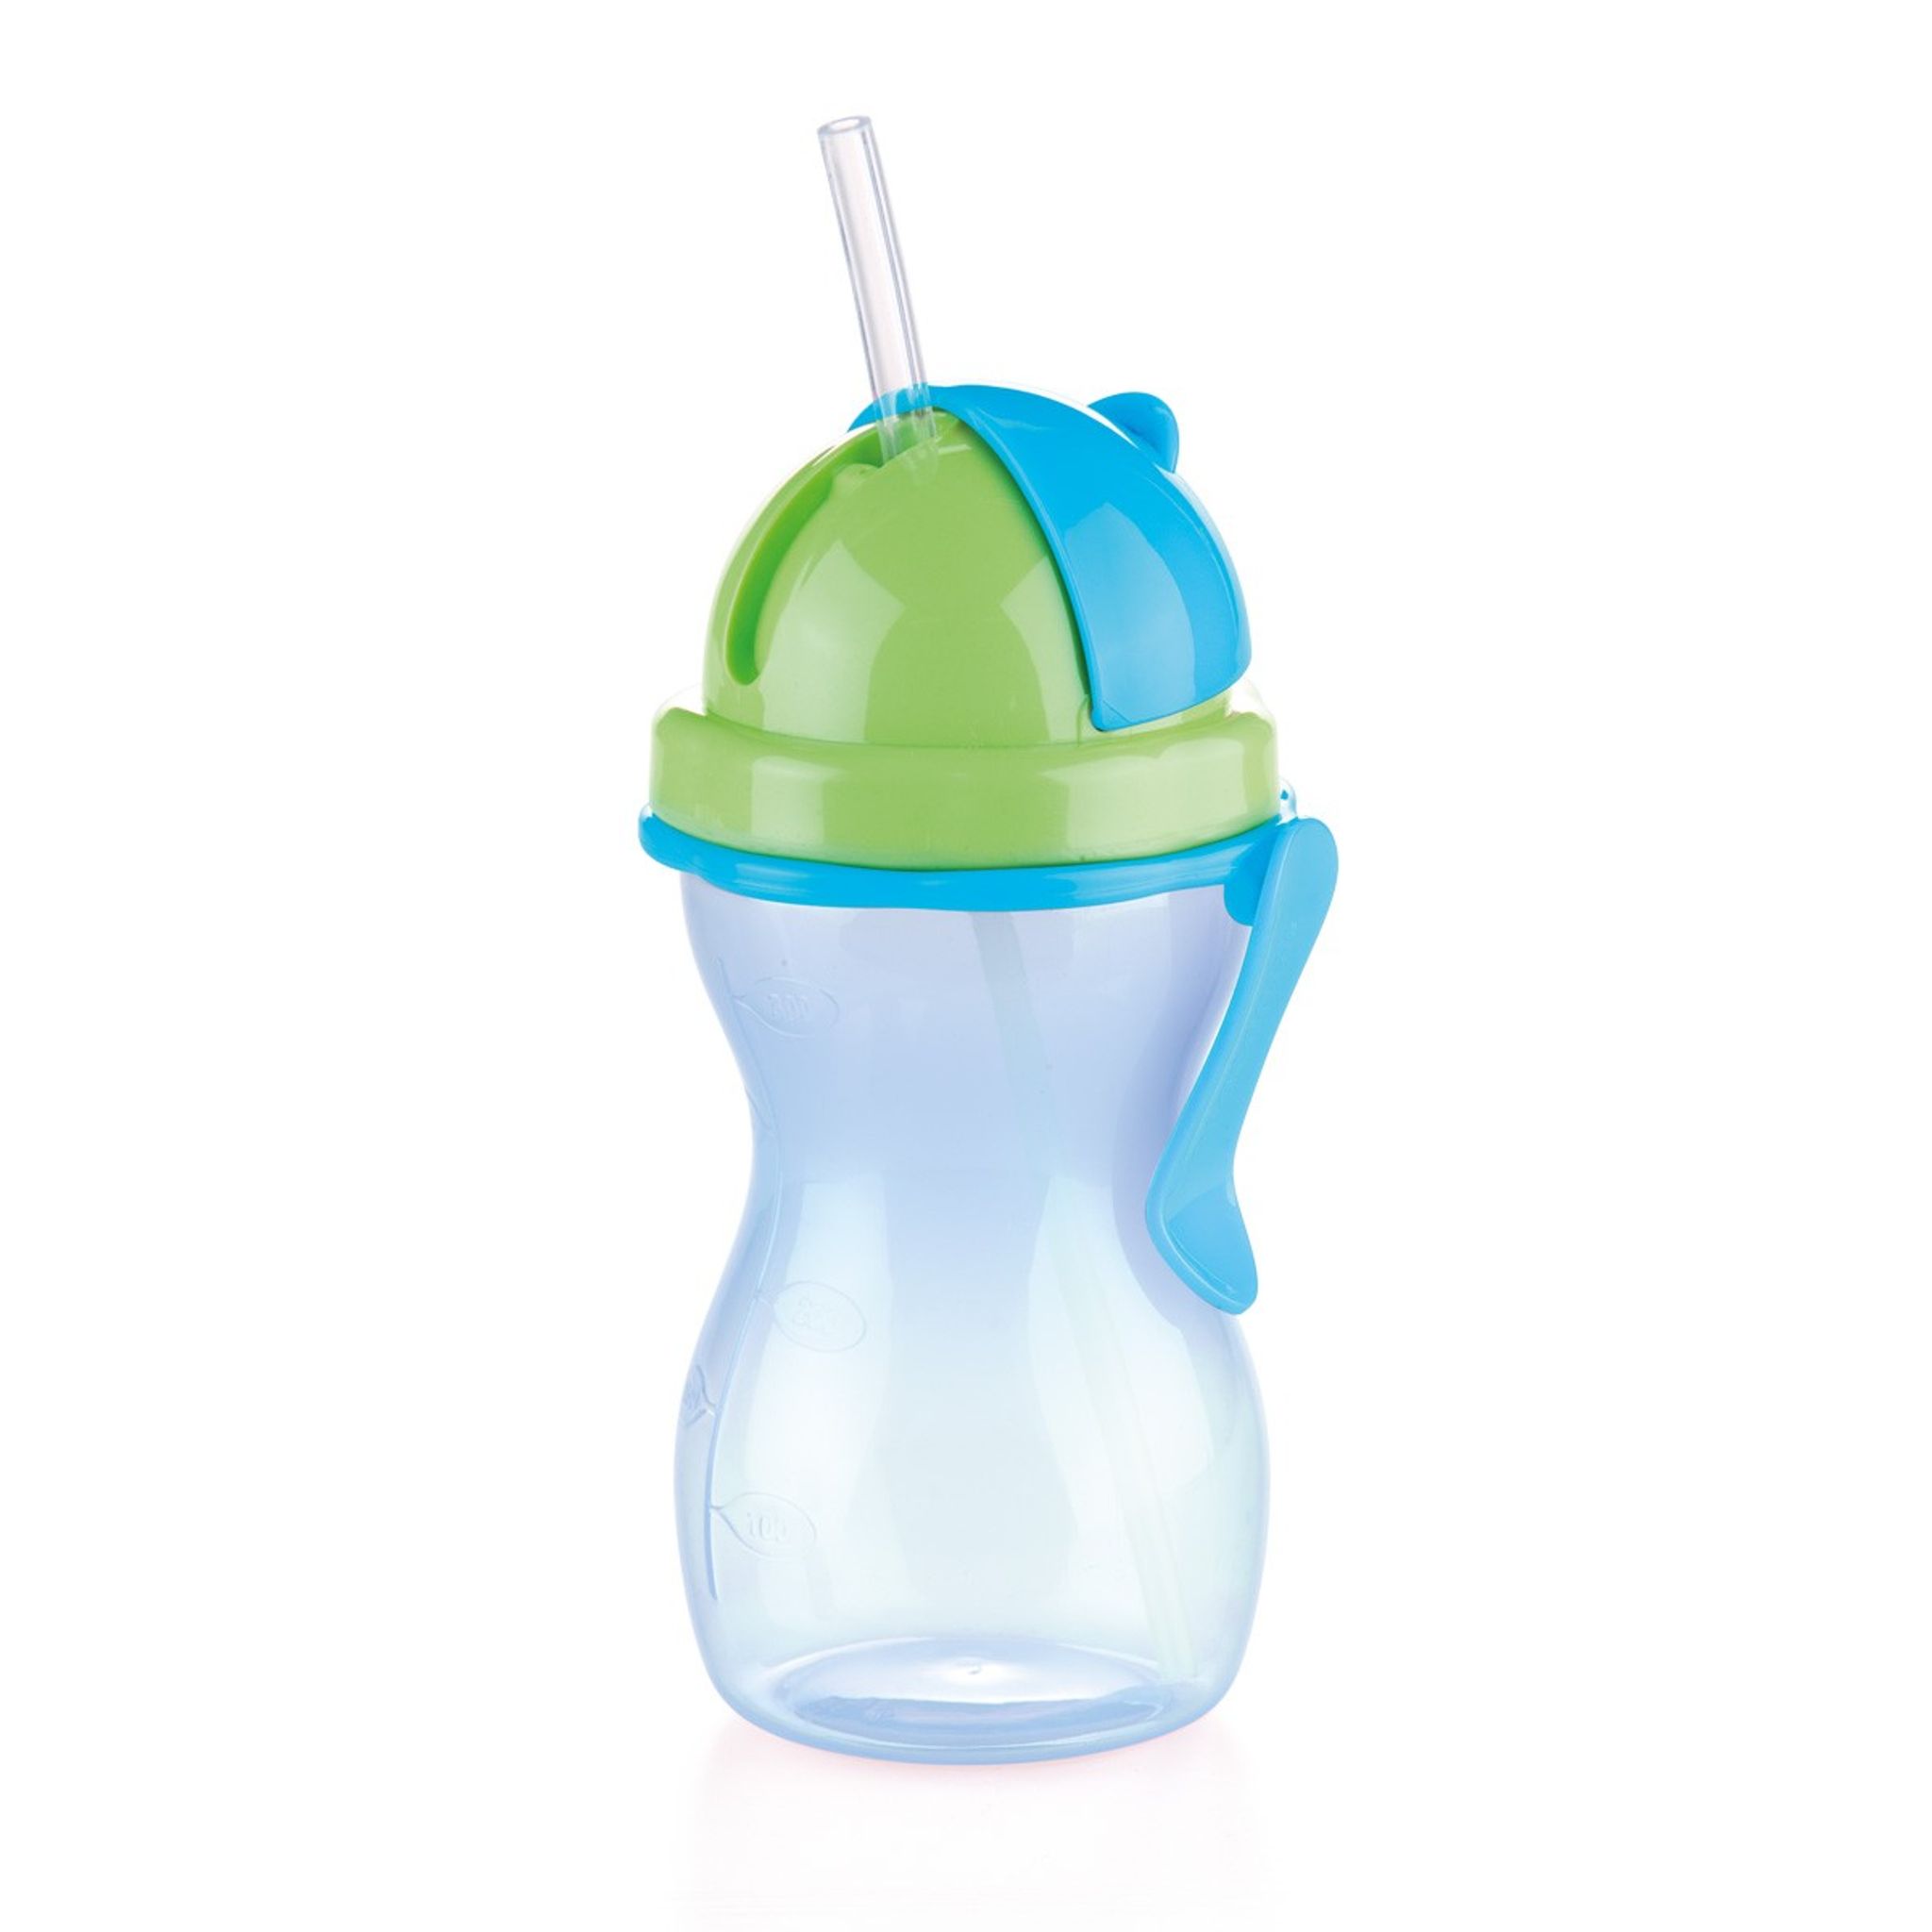 Kindertrinkflasche mit Trinkhalm BAMBINI 300 ml, grün, blau